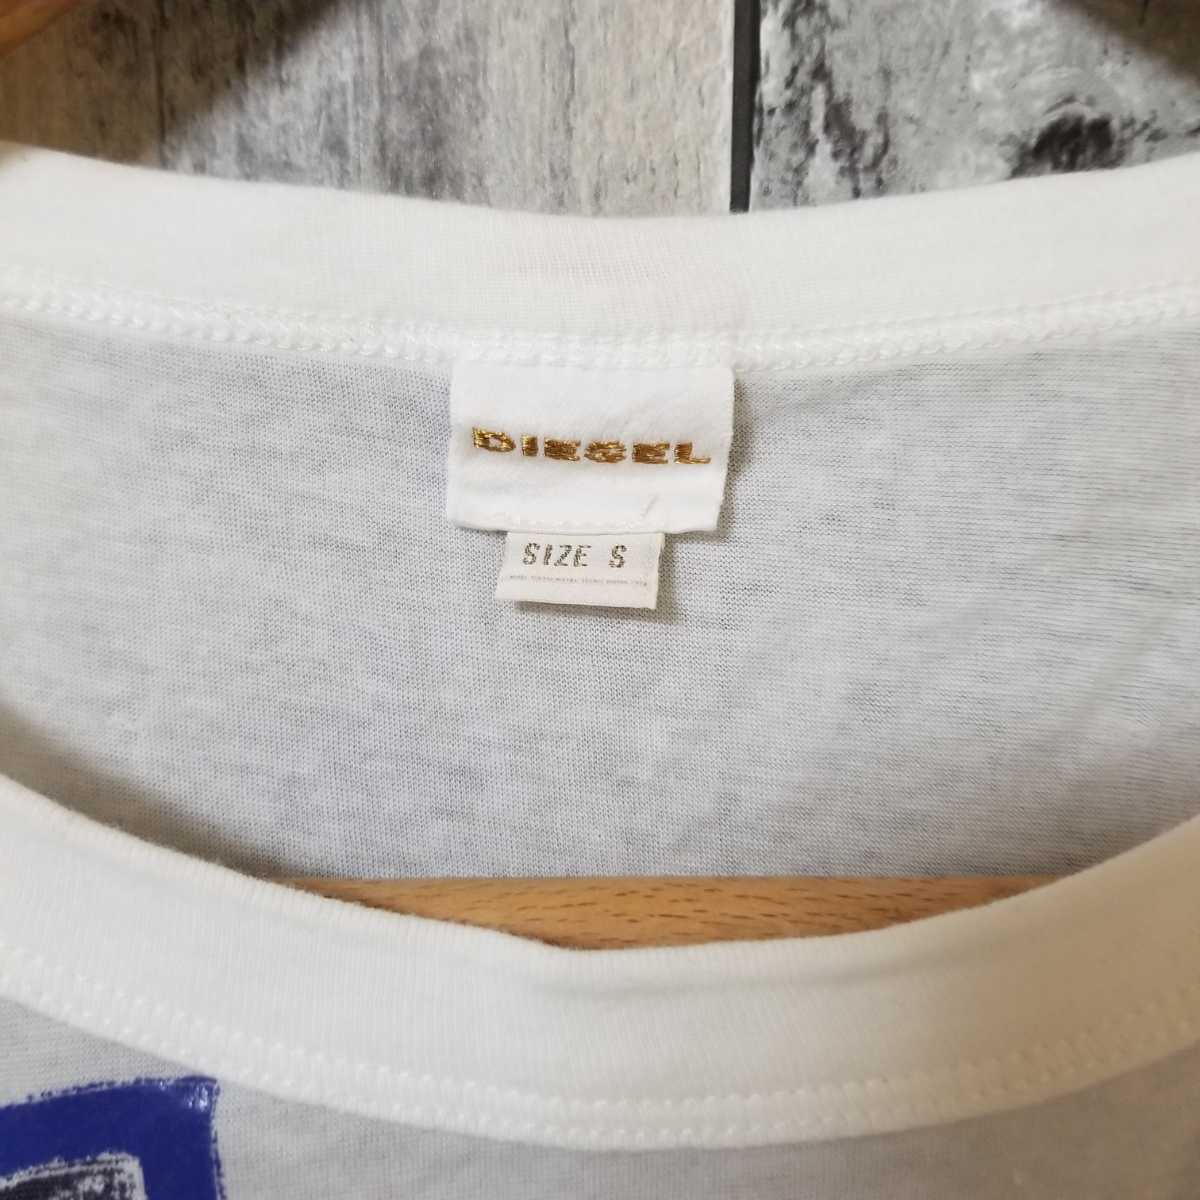 DIESEL дизель футболка S размер cut and sewn тонкий женский оттенок белого 